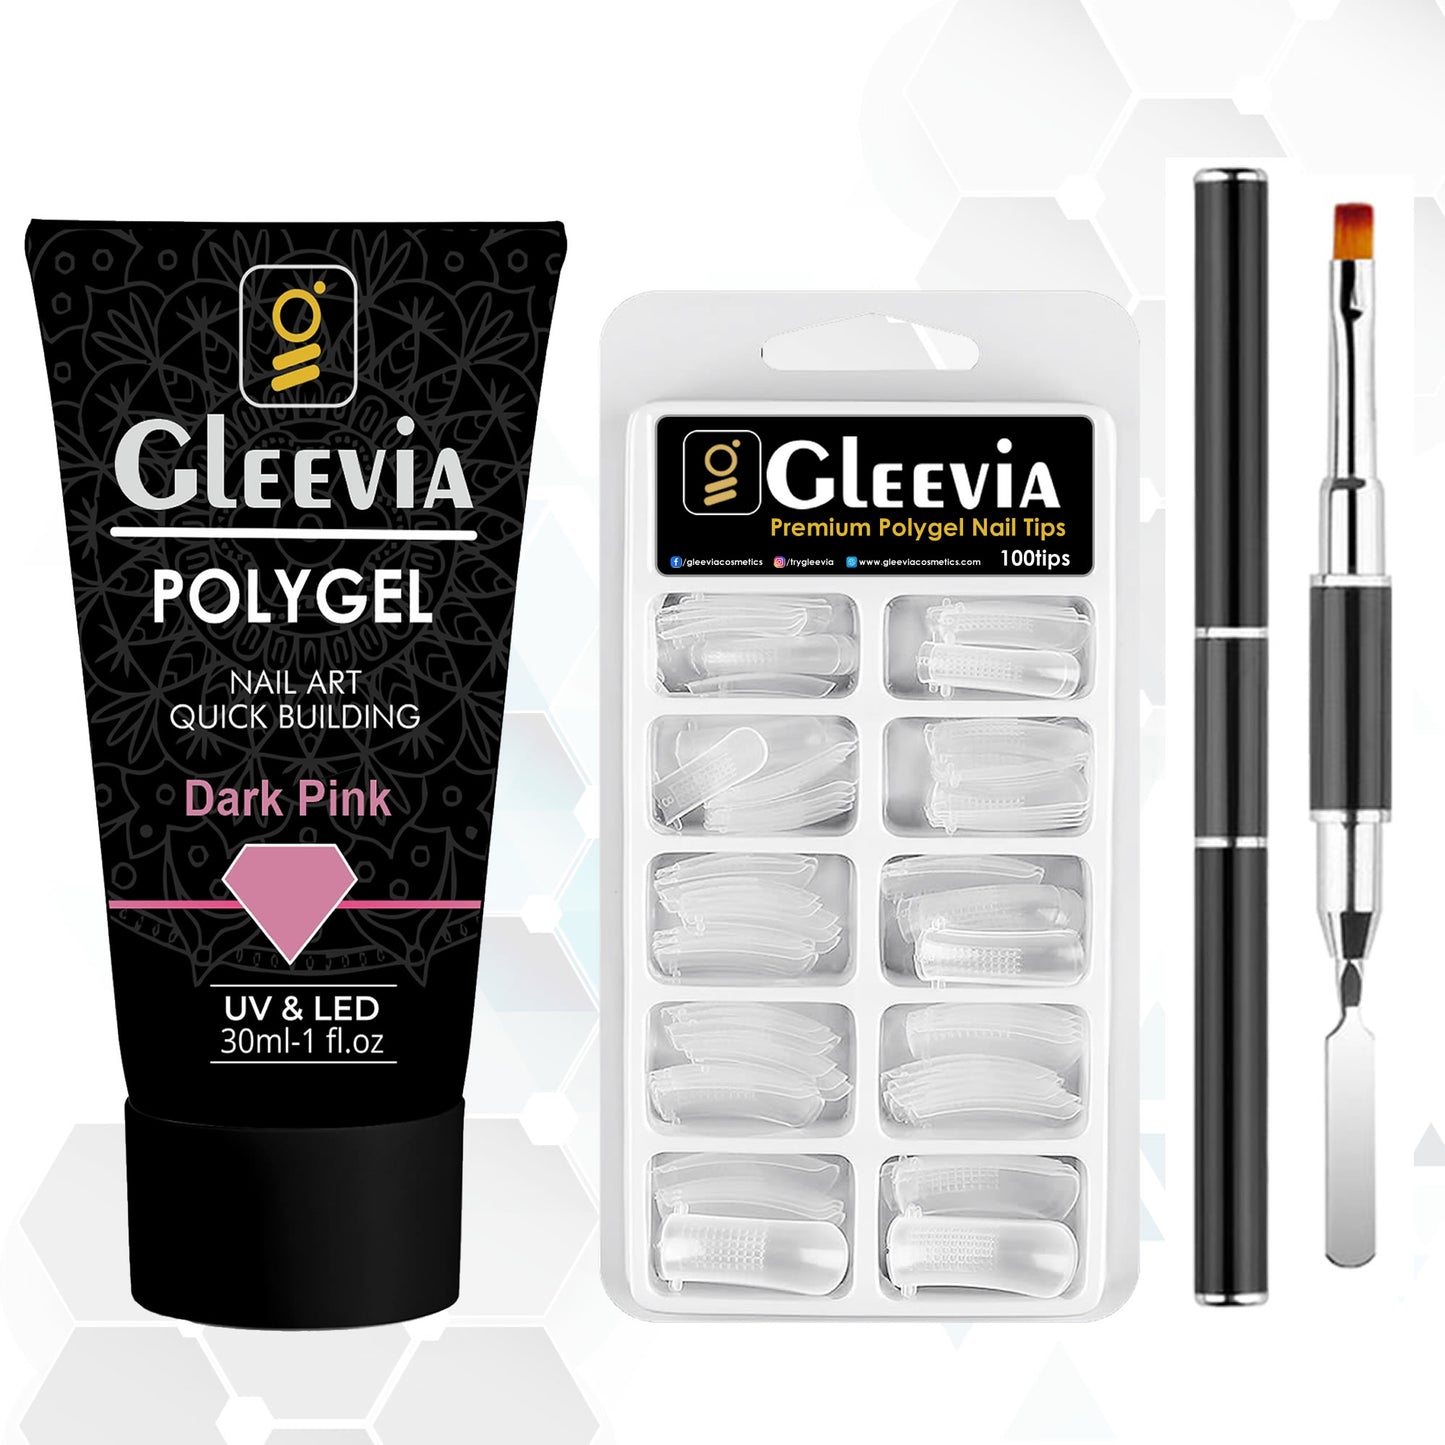 Gleevia PolyGel Nail Art Quick Building 30ml Pack - Quick Nail Extension Gel Dark Pink (Combo Pack)